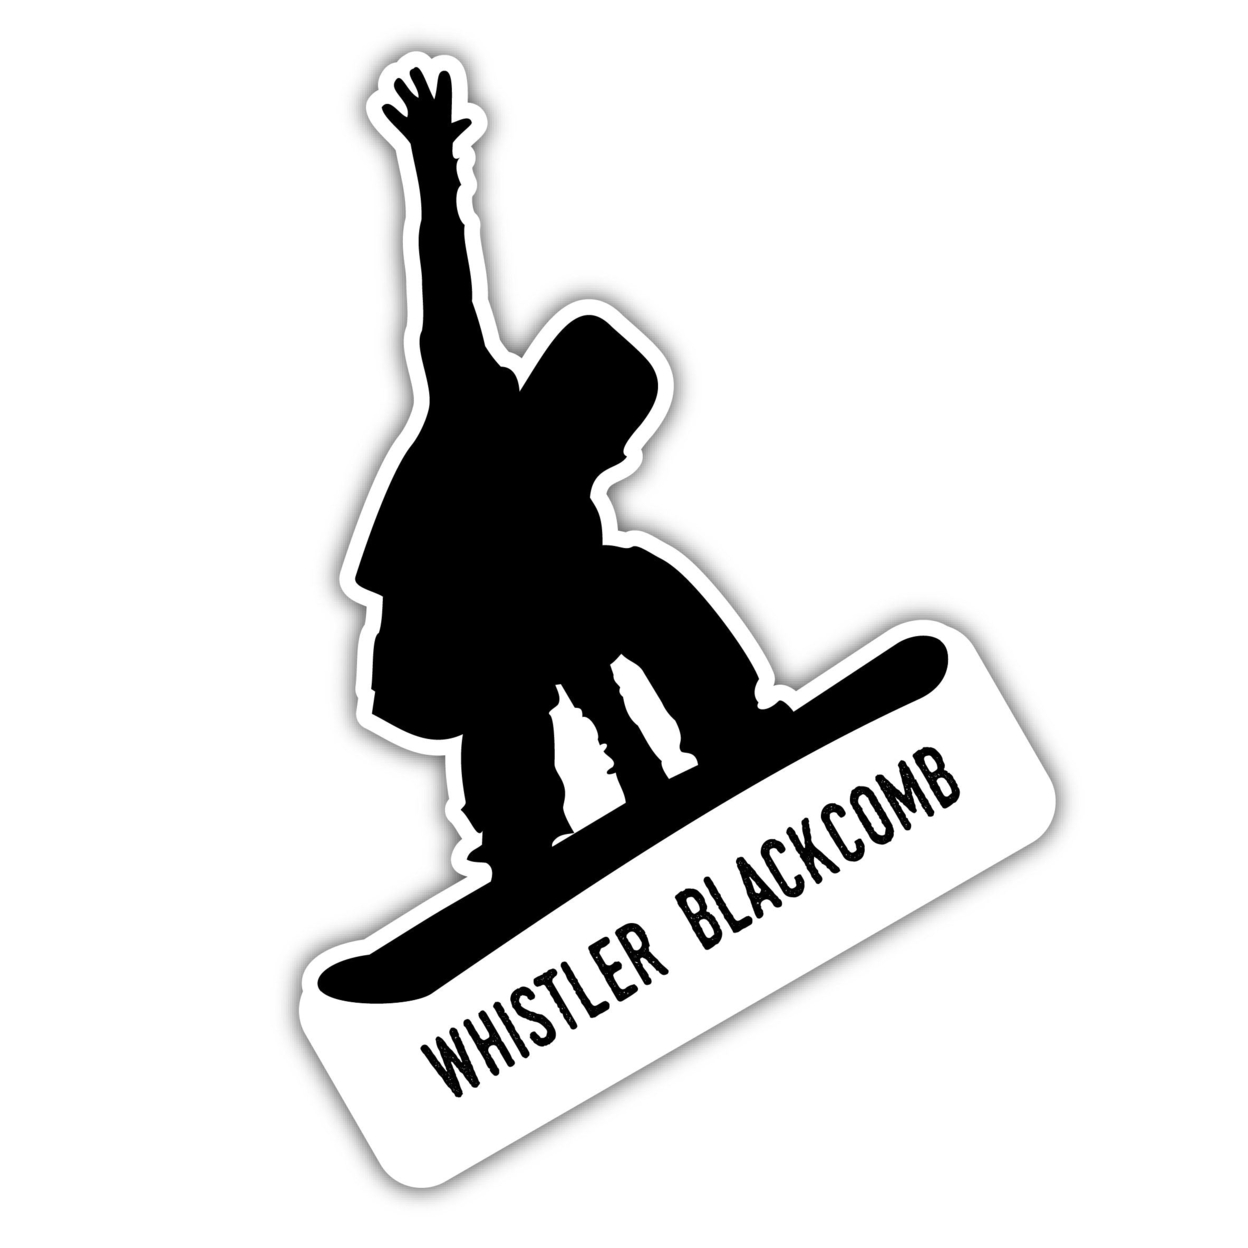 Whistler Blackcomb British Columbia Ski Adventures Souvenir 4 Inch Vinyl Decal Sticker Board Design